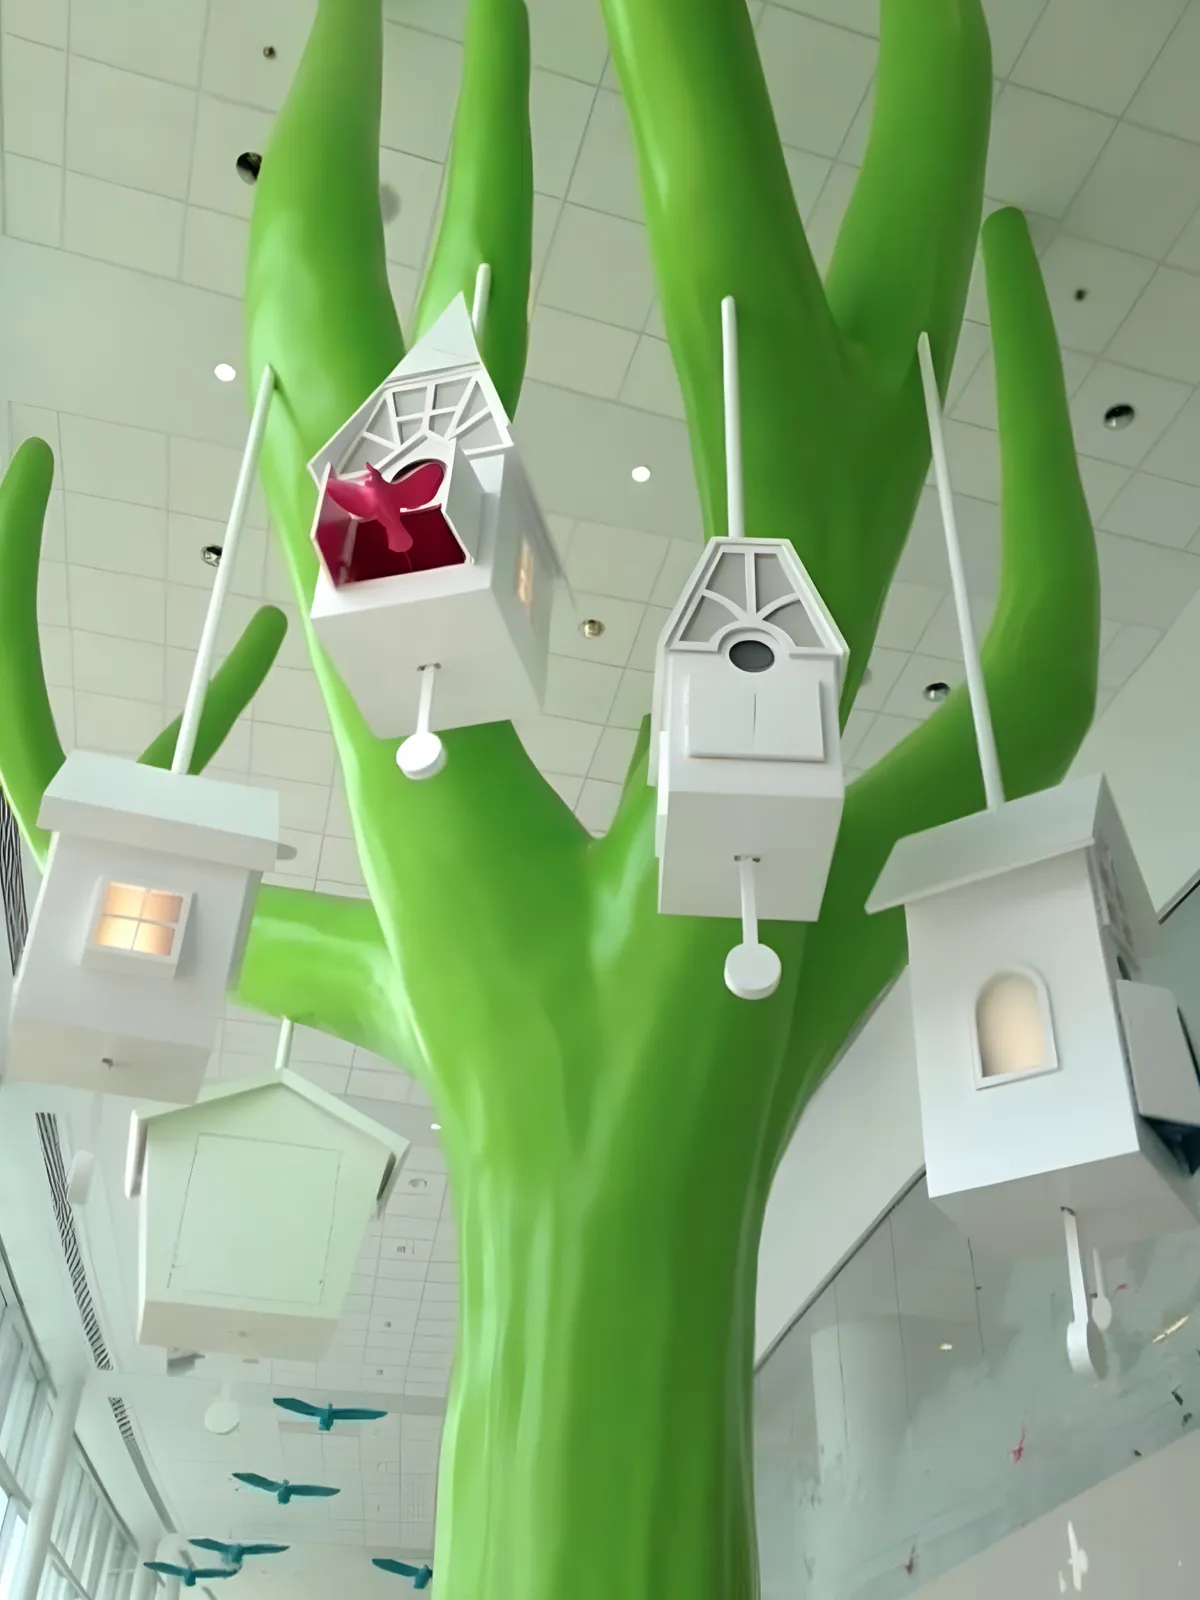 Children's Hospital tree with birdhouses hanging